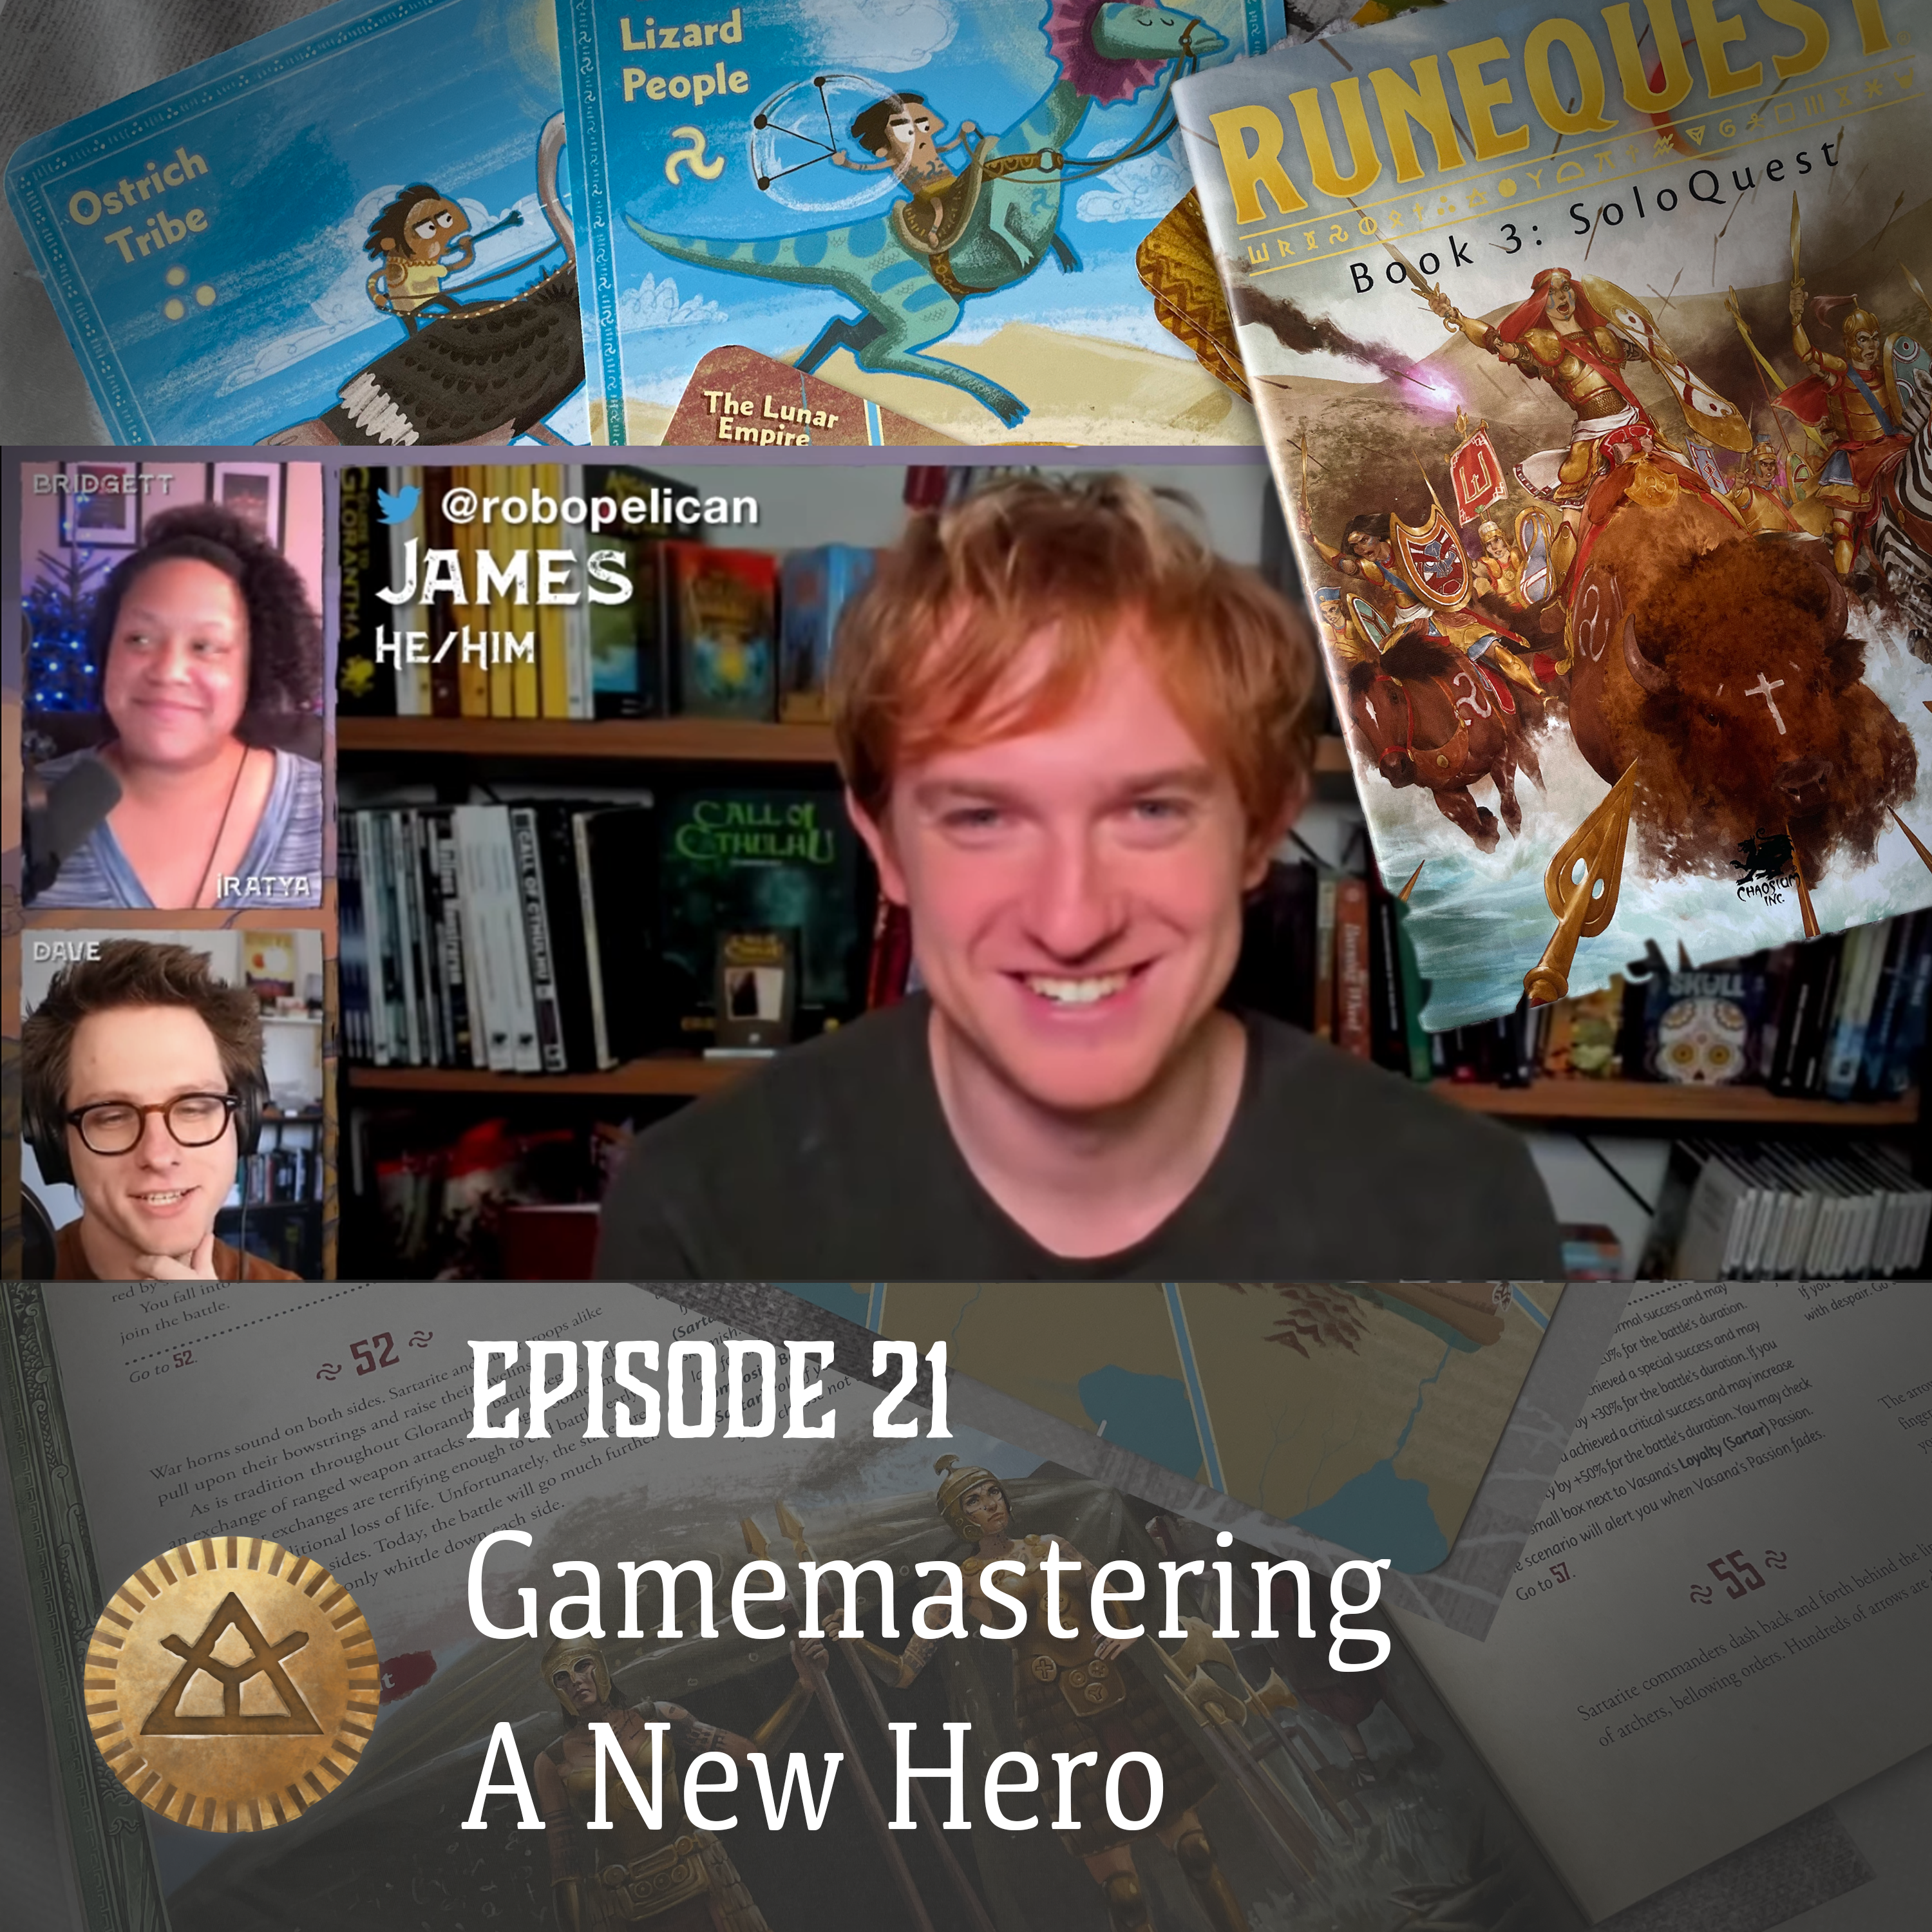 Episode 21: Gamemastering A New Hero